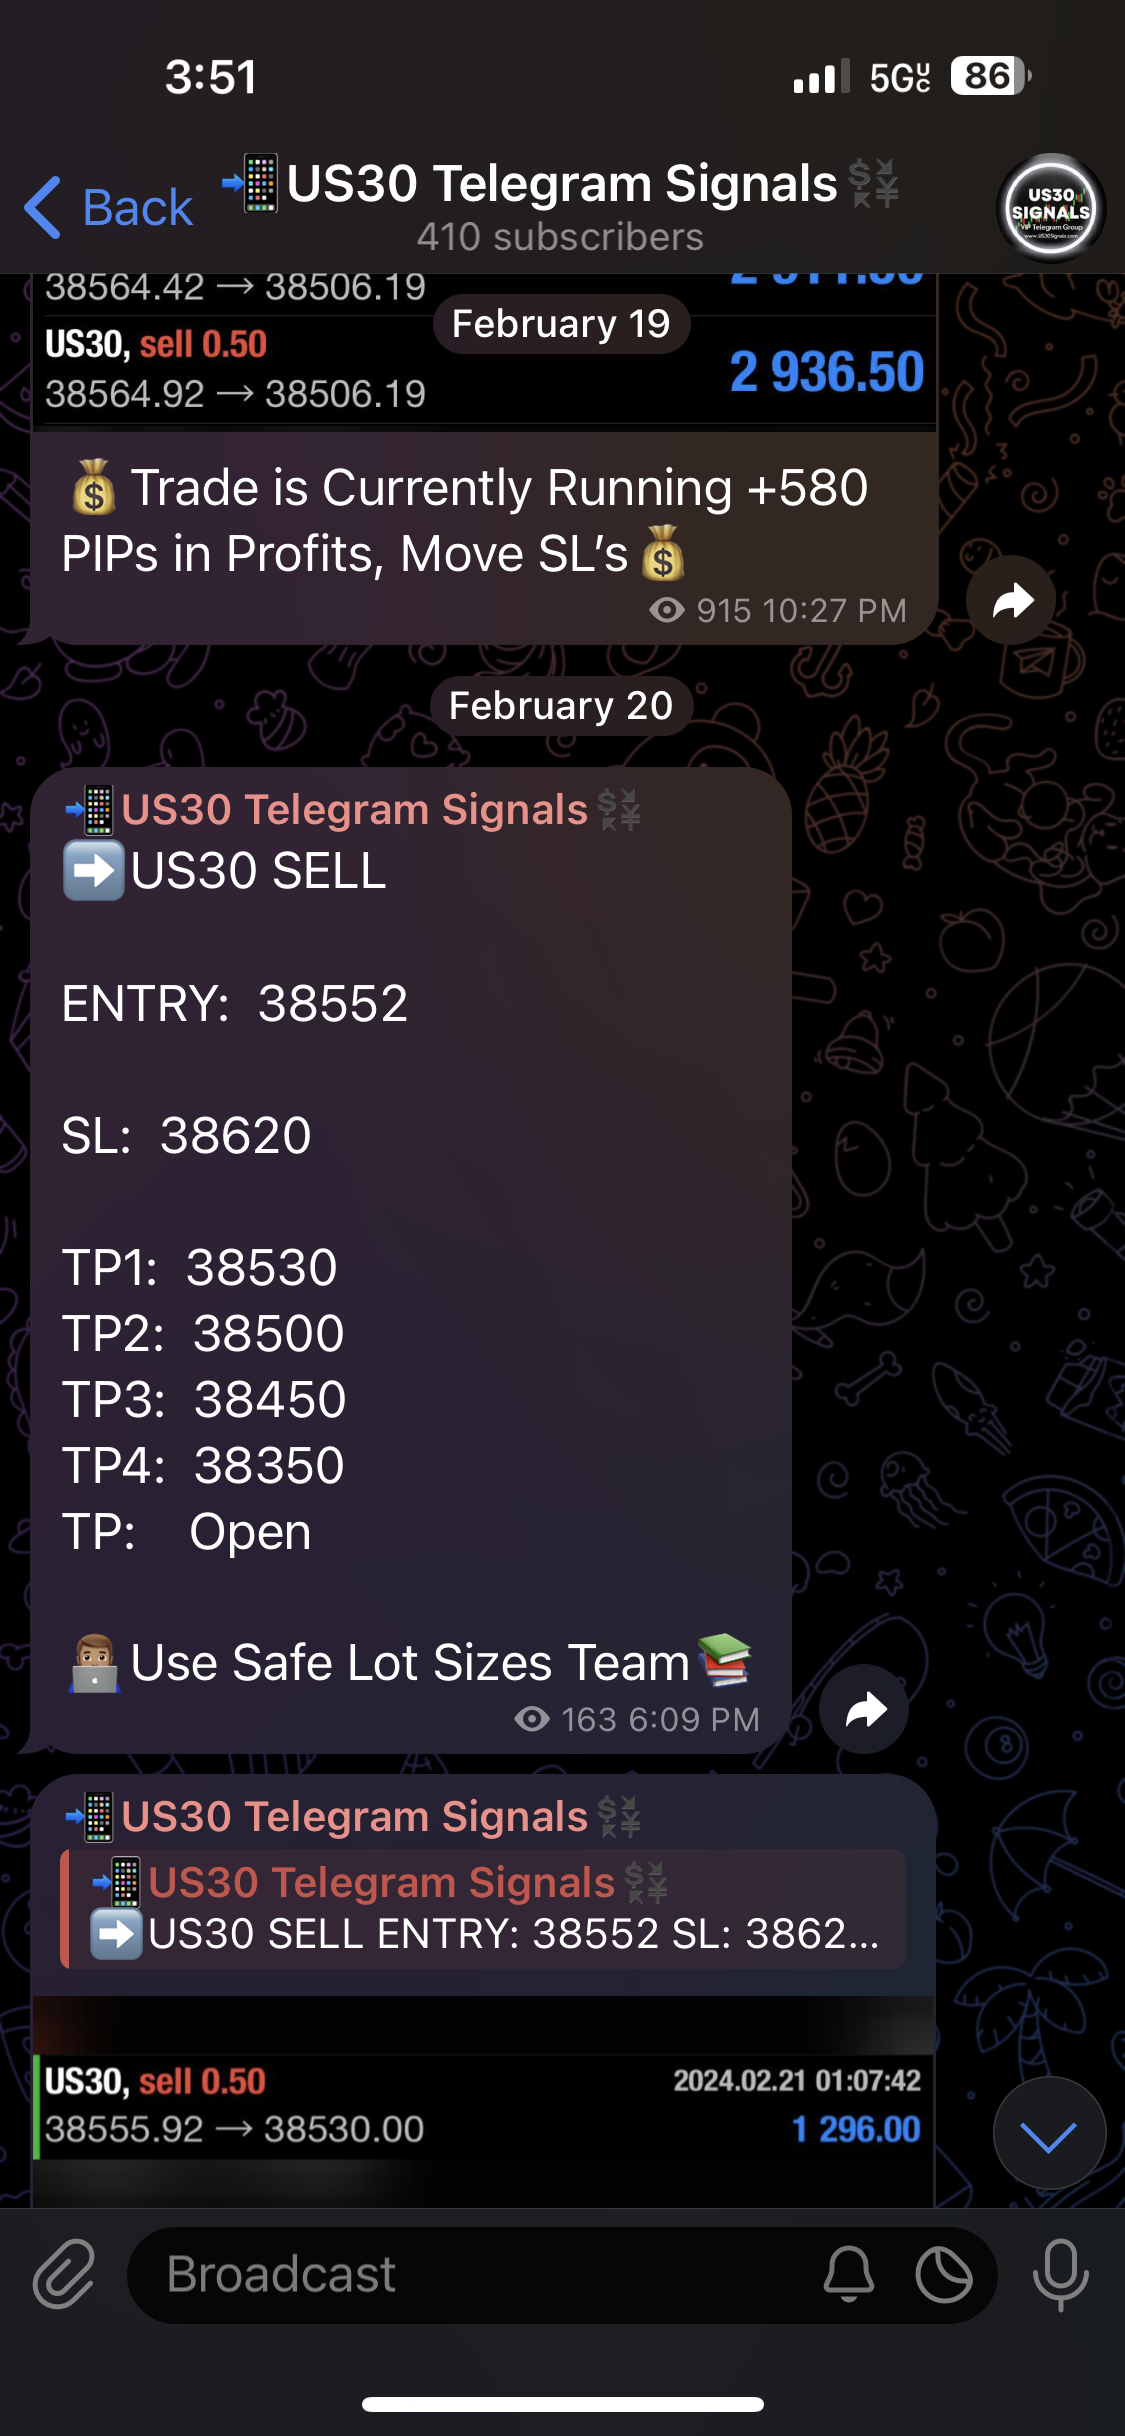 US30 Signals: 1 Full Year Telegram Access